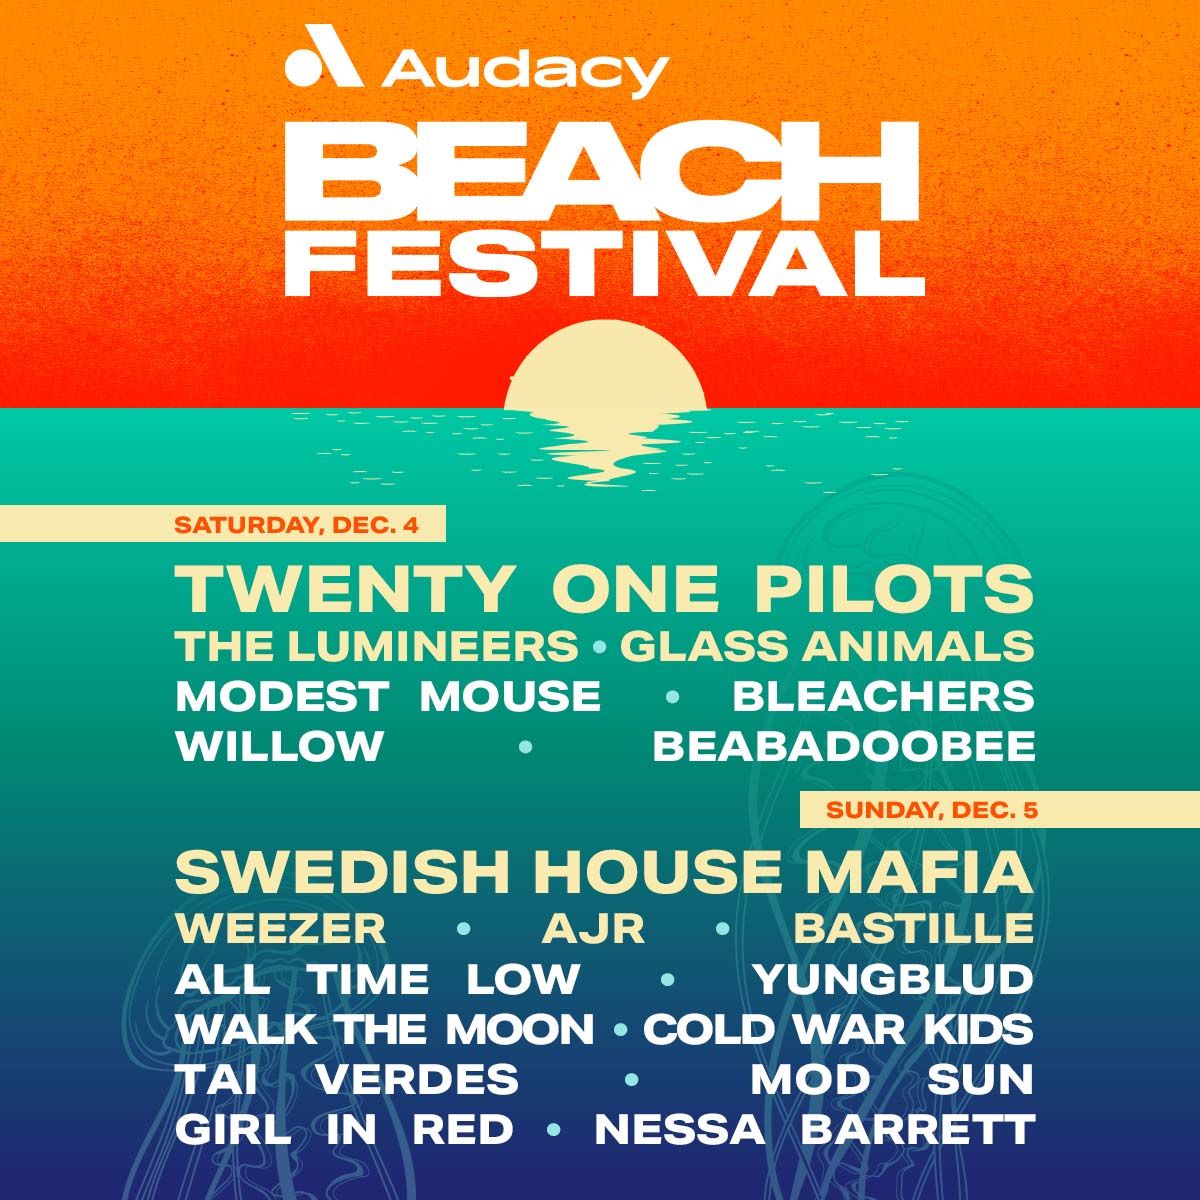 Swedish House Mafia to Headline This Year’s Audacy Beach Festival